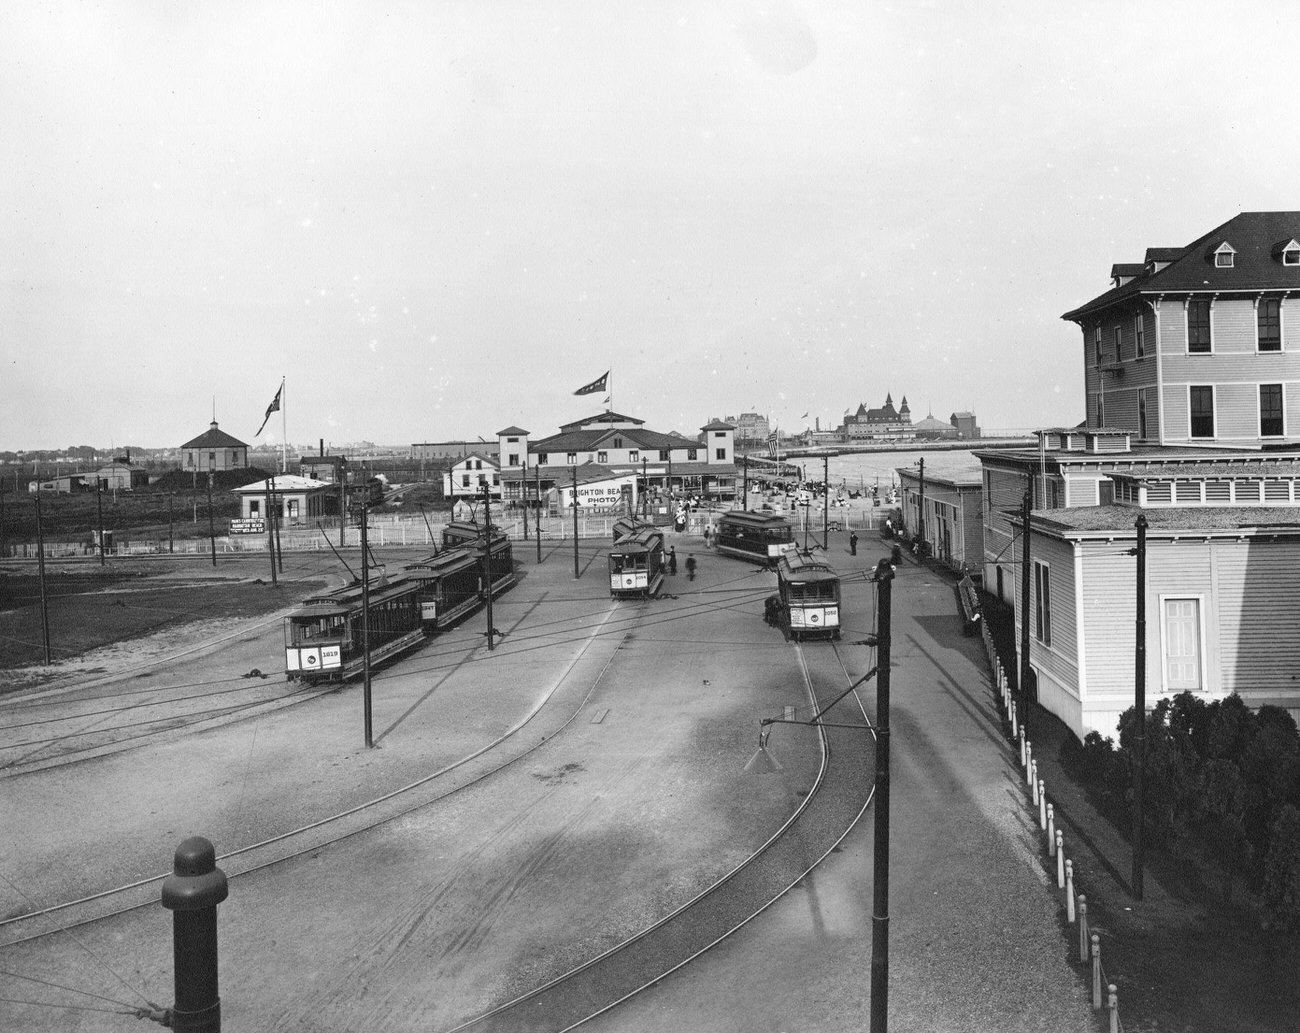 Brighton Beach Transit Circle, Brooklyn, Late 1890S.